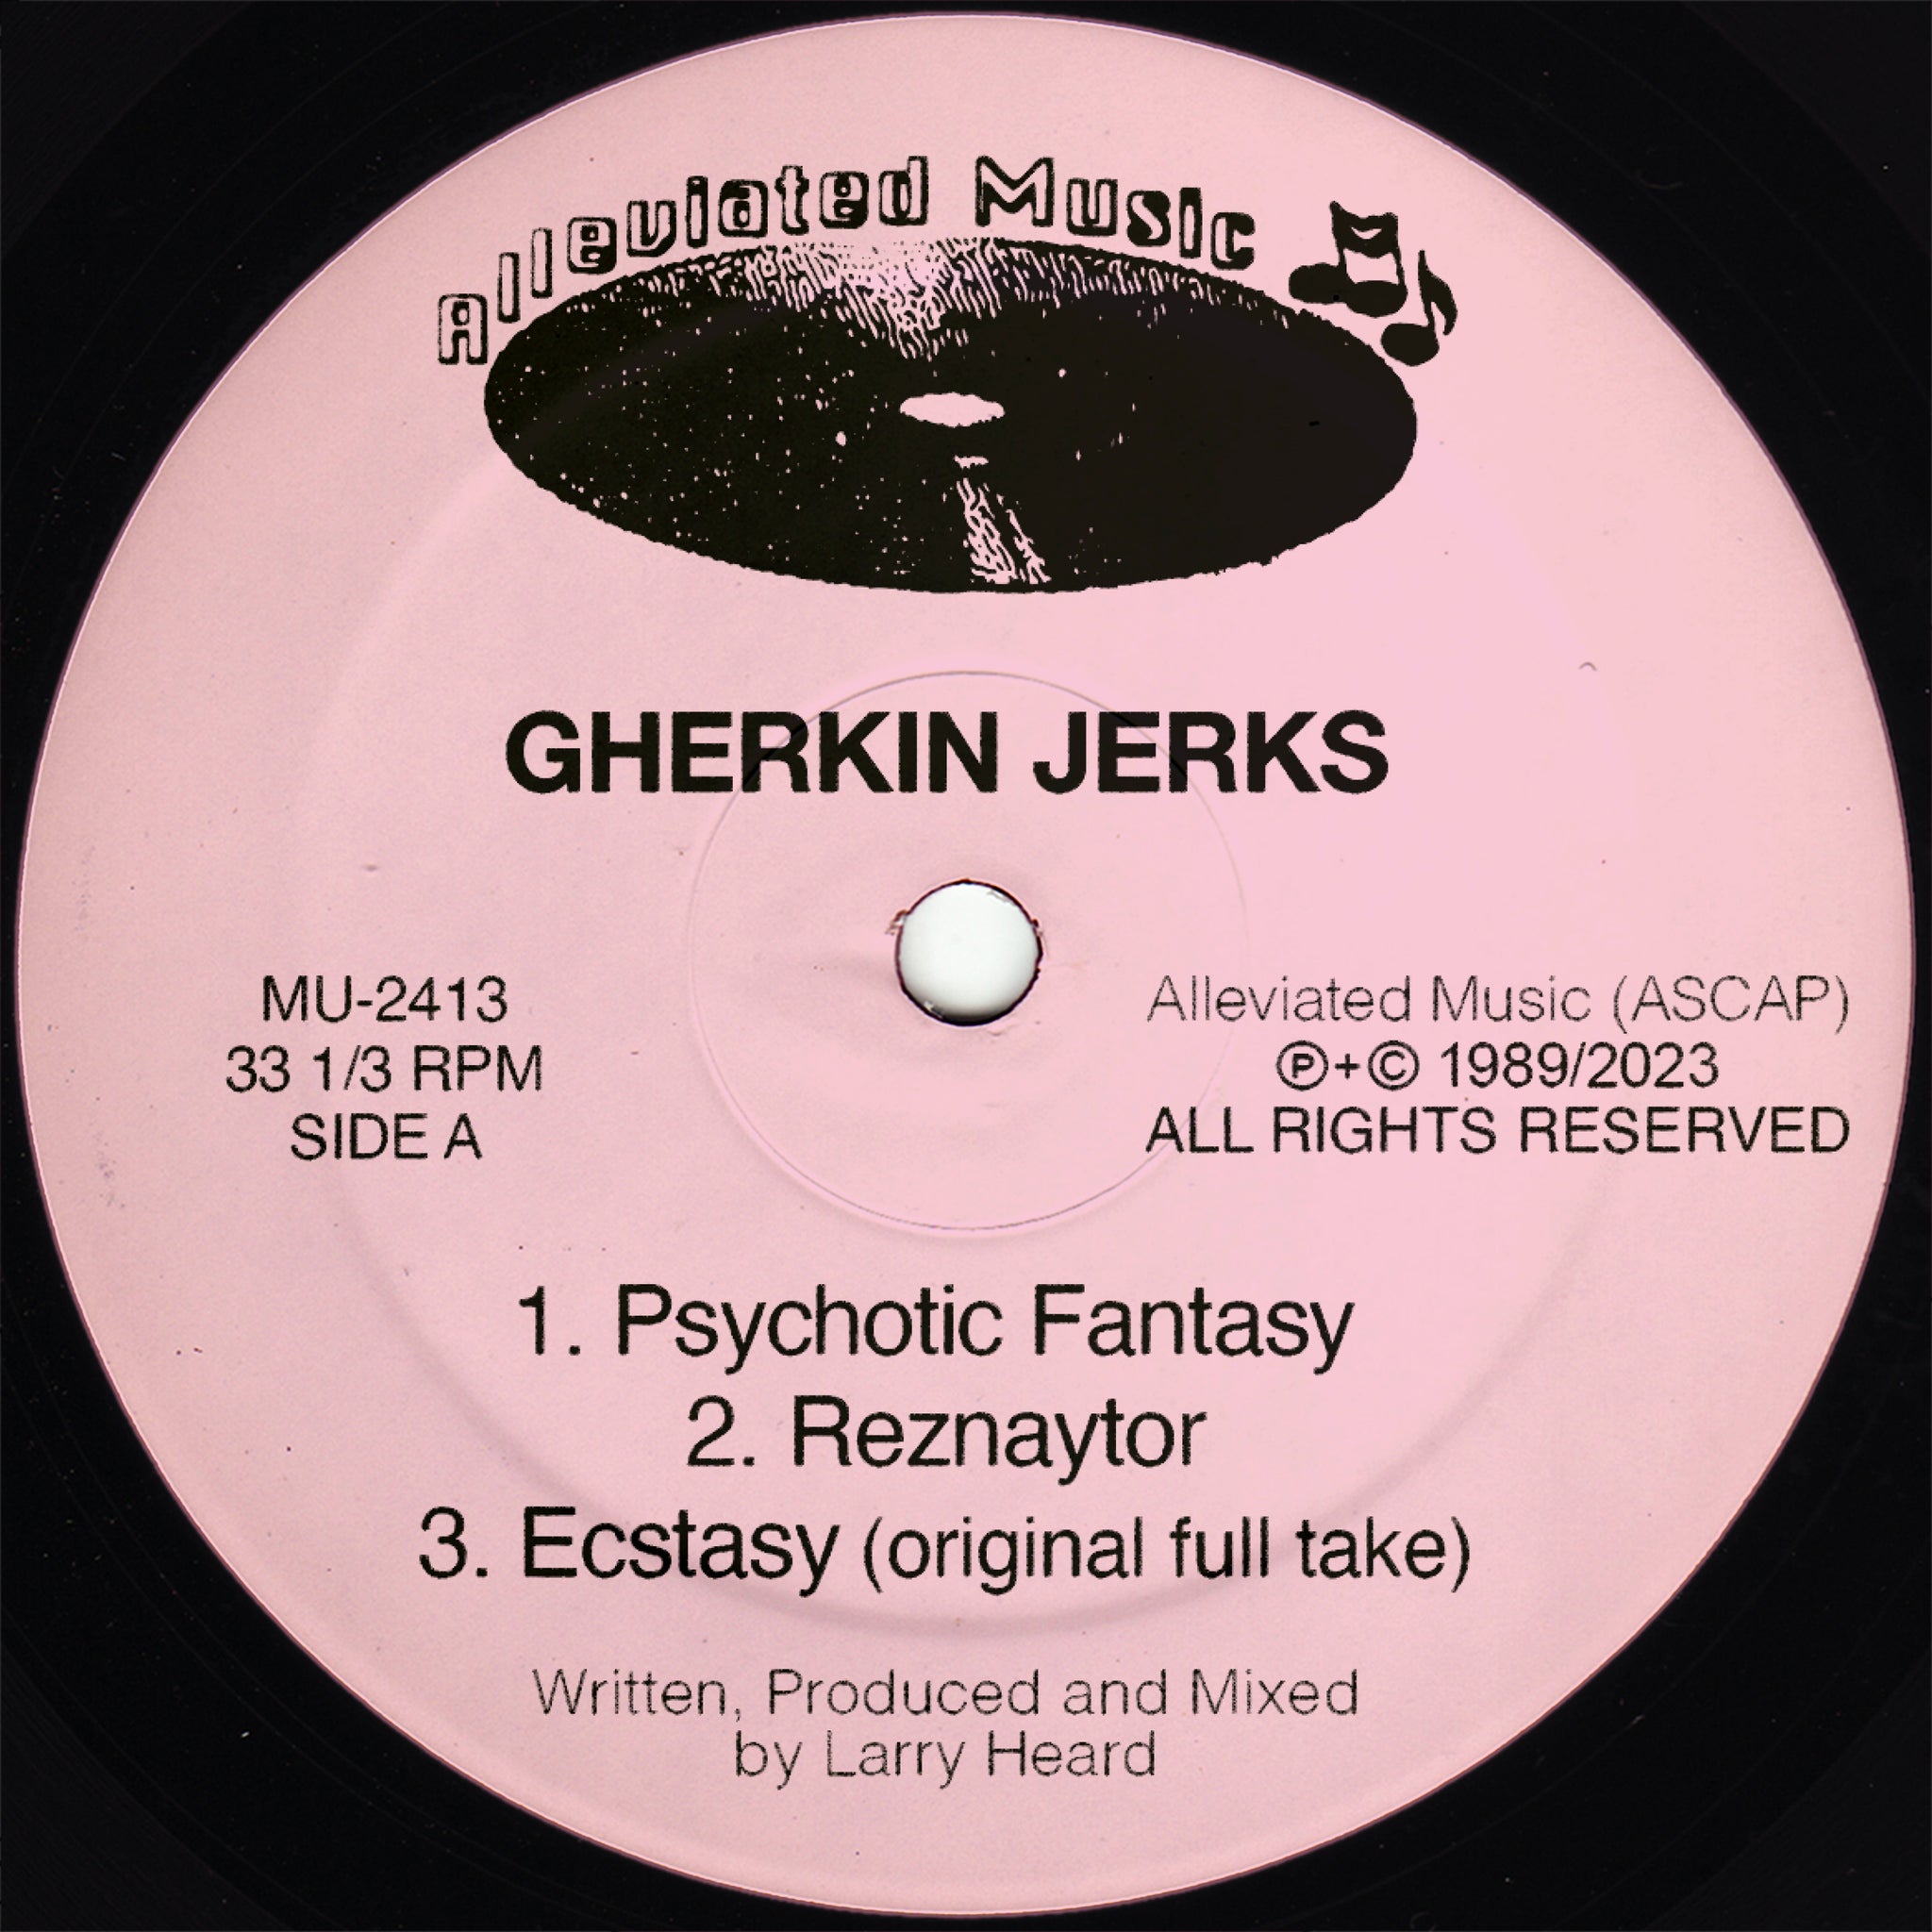 *PRE-ORDER* Gherkin Jerks 'Gherkin Jerks EP' 12"